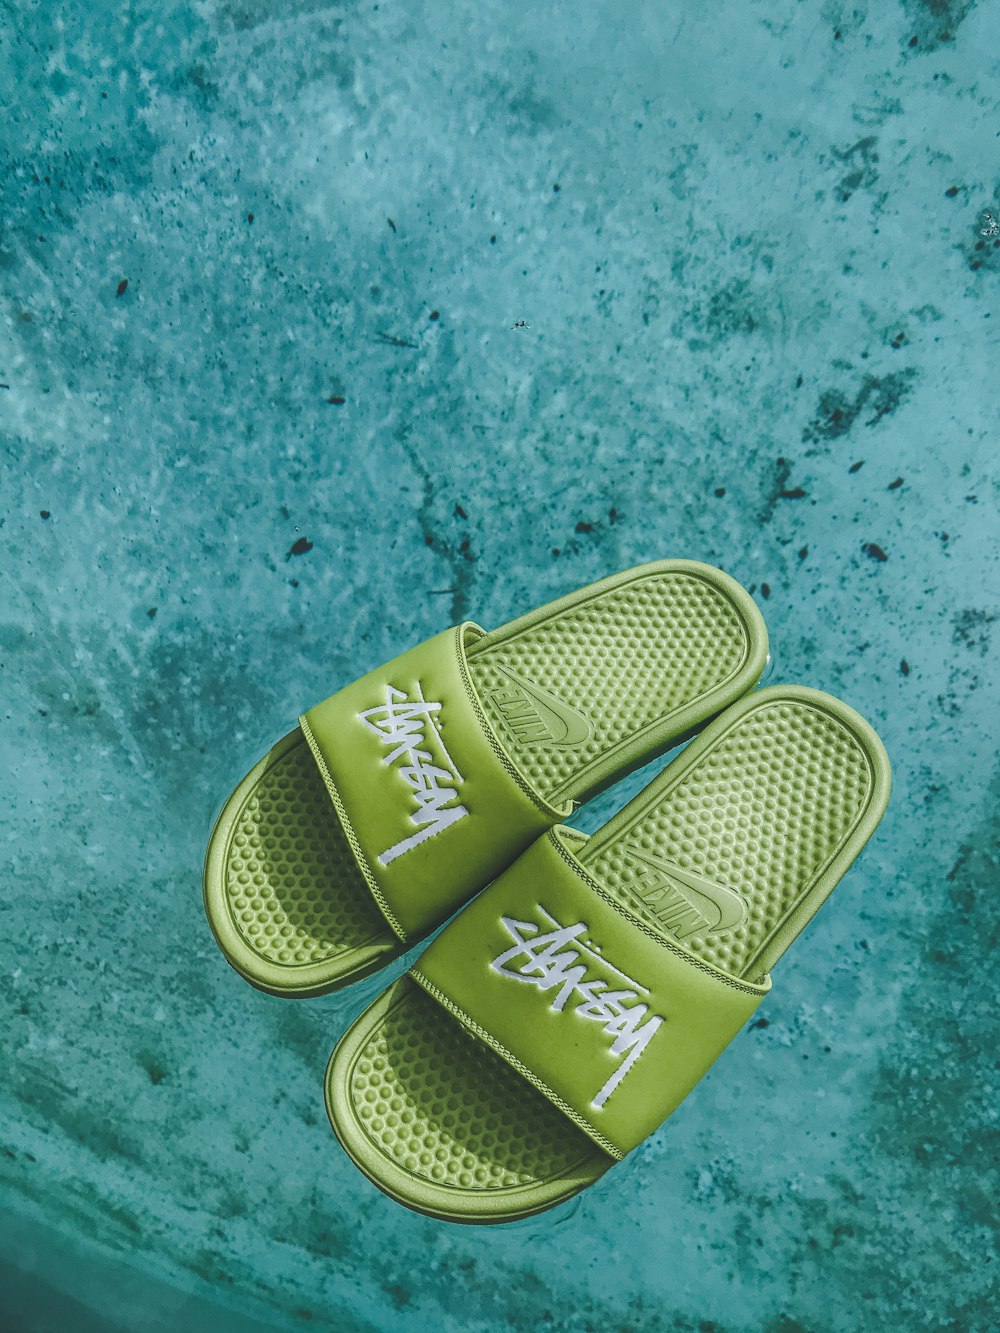 Sandali Nike Slide neri e gialli